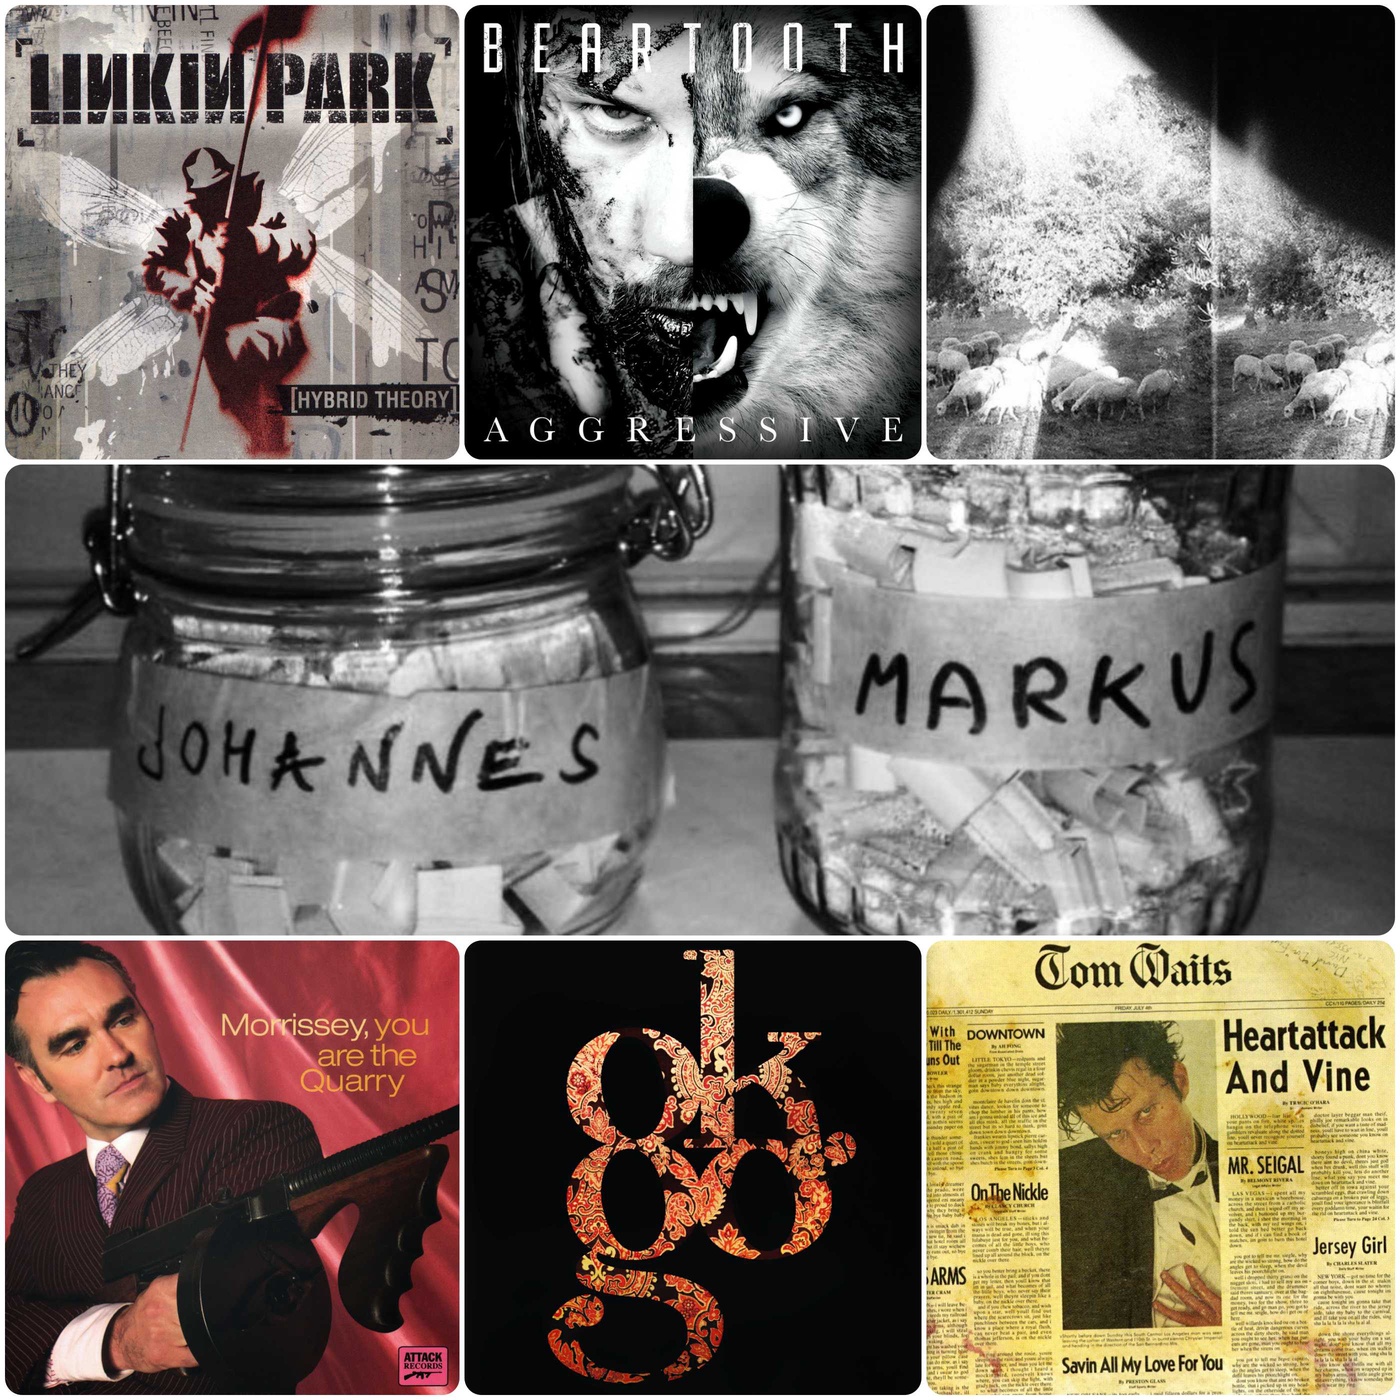 #24 - Beartooth, Godspeed You! Black Emperor, Linkin Park, Morrissey, OK Go, Tom Waits